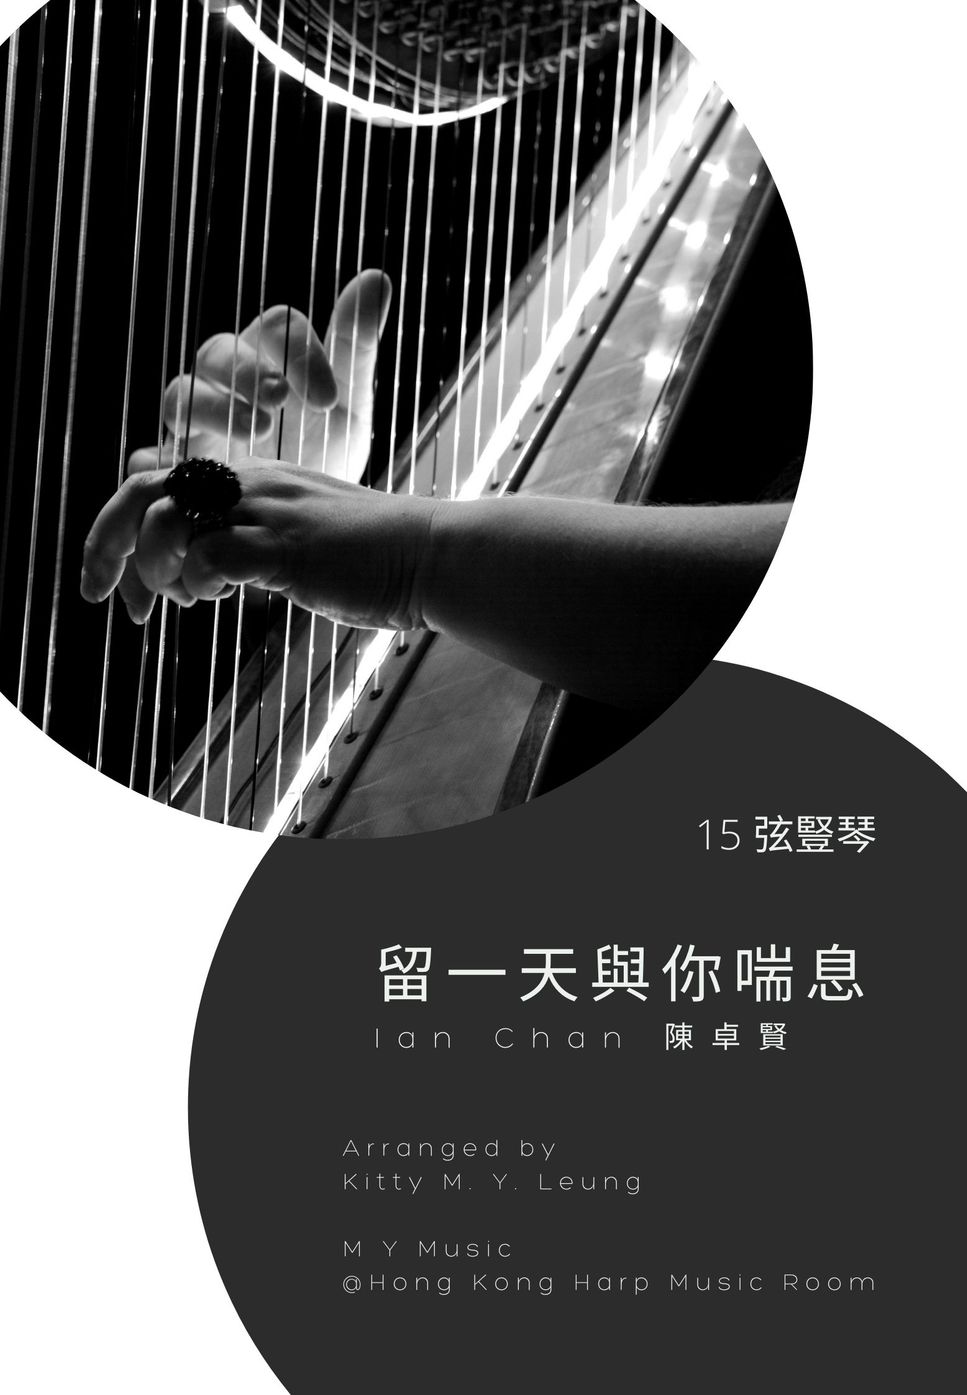 IAN CHAN 陳卓賢 - 留一天與你喘息 (15 String Harp) by Kitty M. Y. Leung